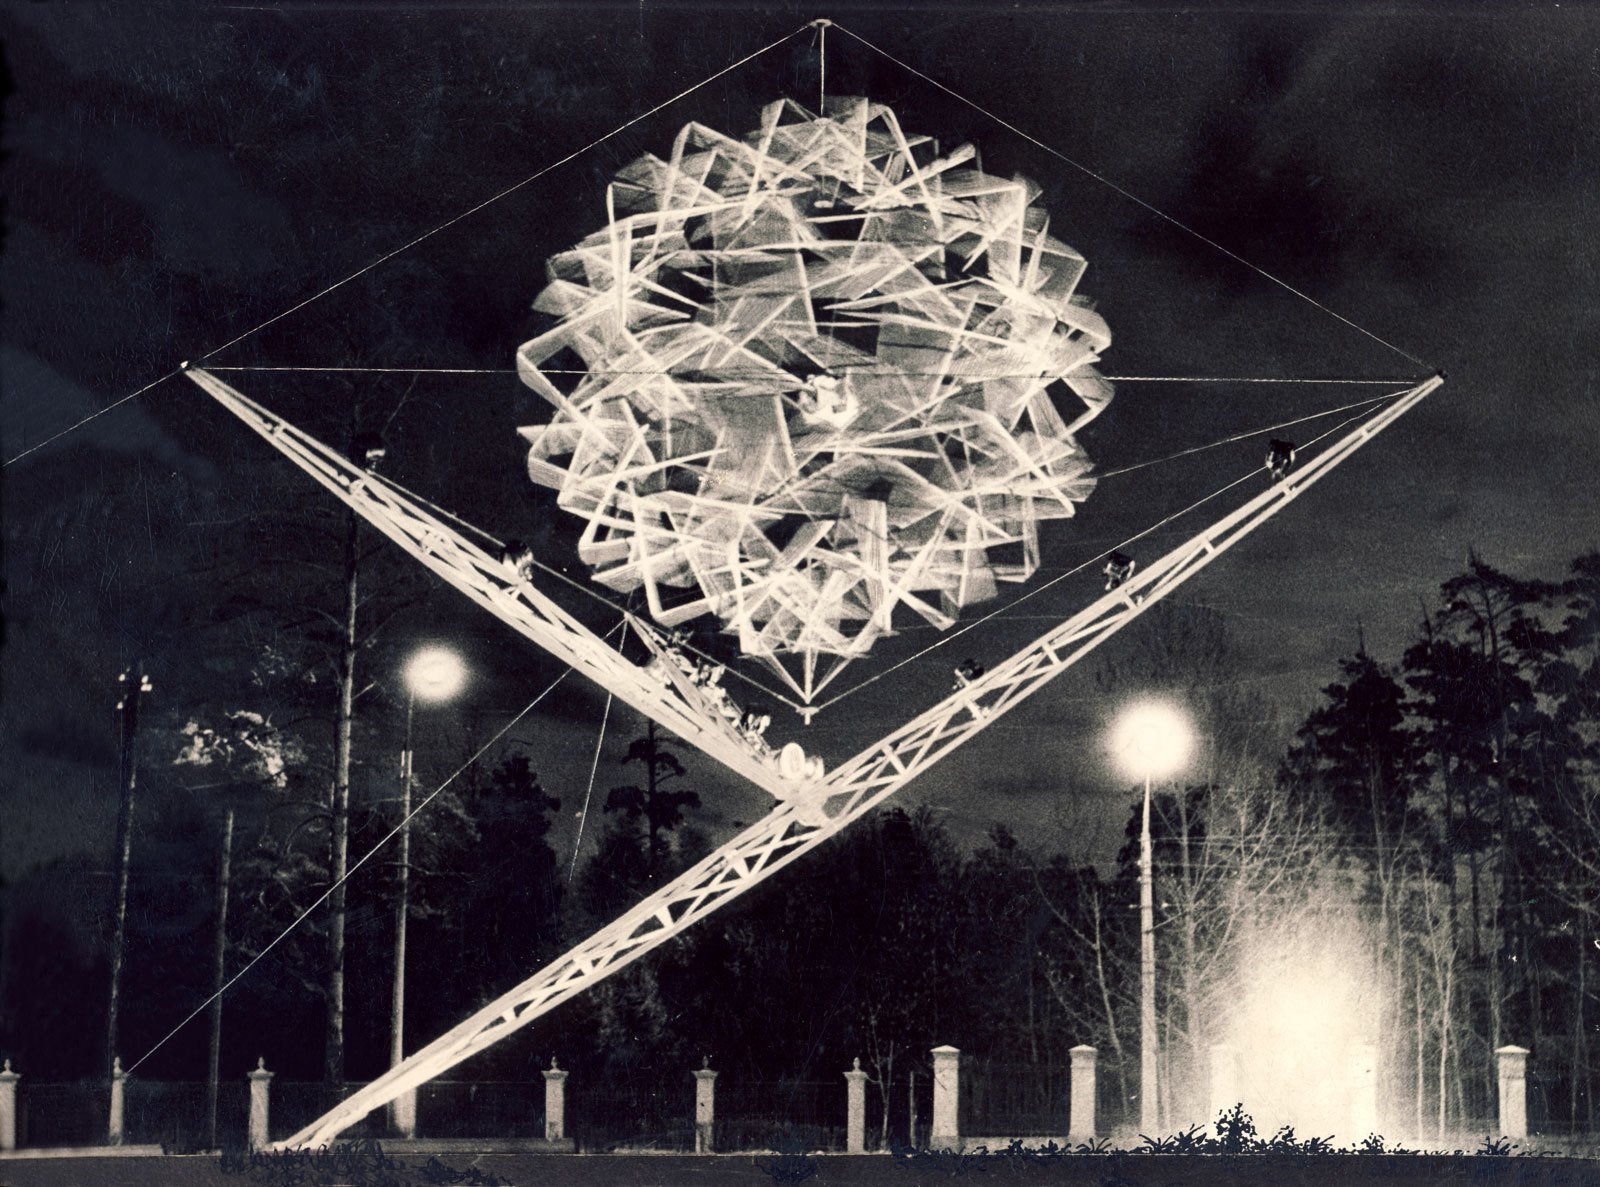 Viacheslav Koleichuk and Mir group, Atom (1967), kinetic installation, Kurchatov Square, MoscowPhoto: Viacheslav Koleichuk Archive